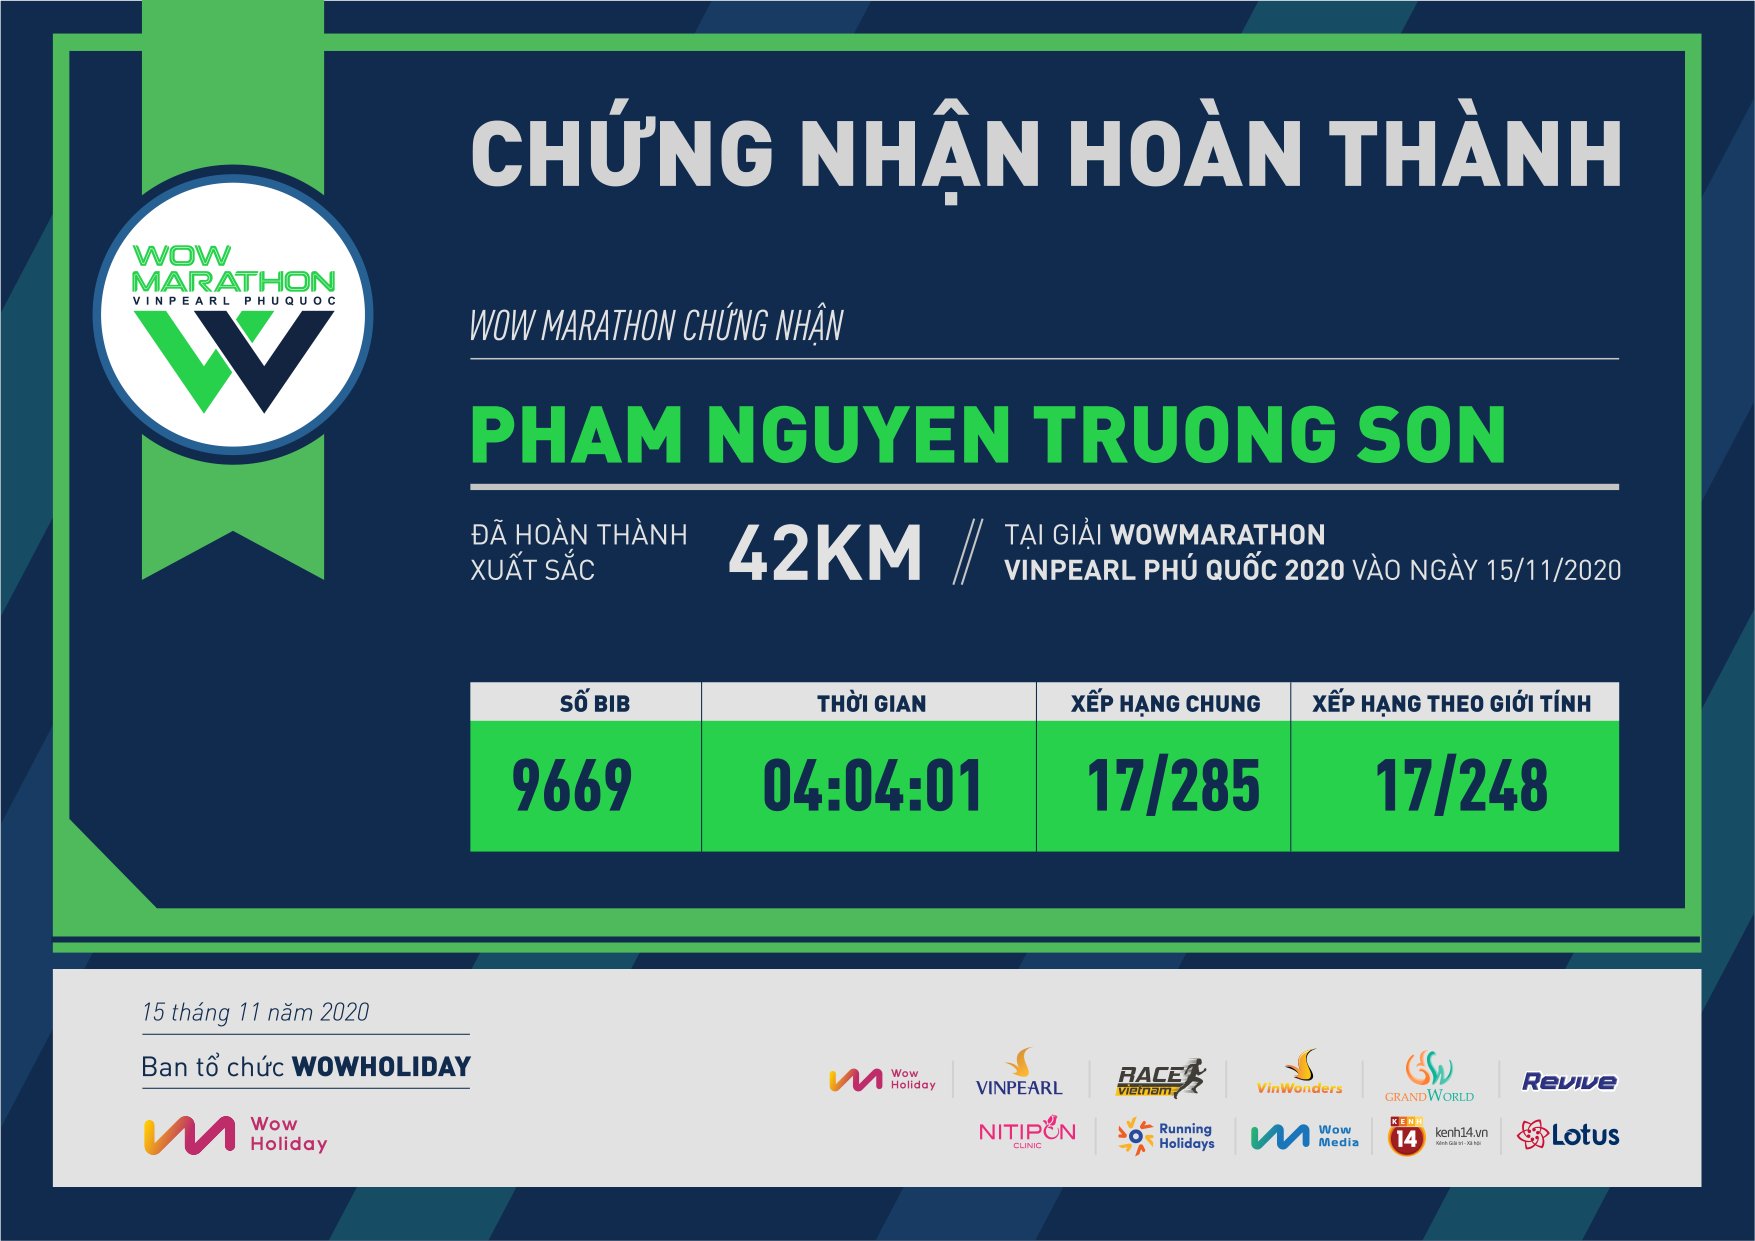 9669 - Pham Nguyen Truong Son